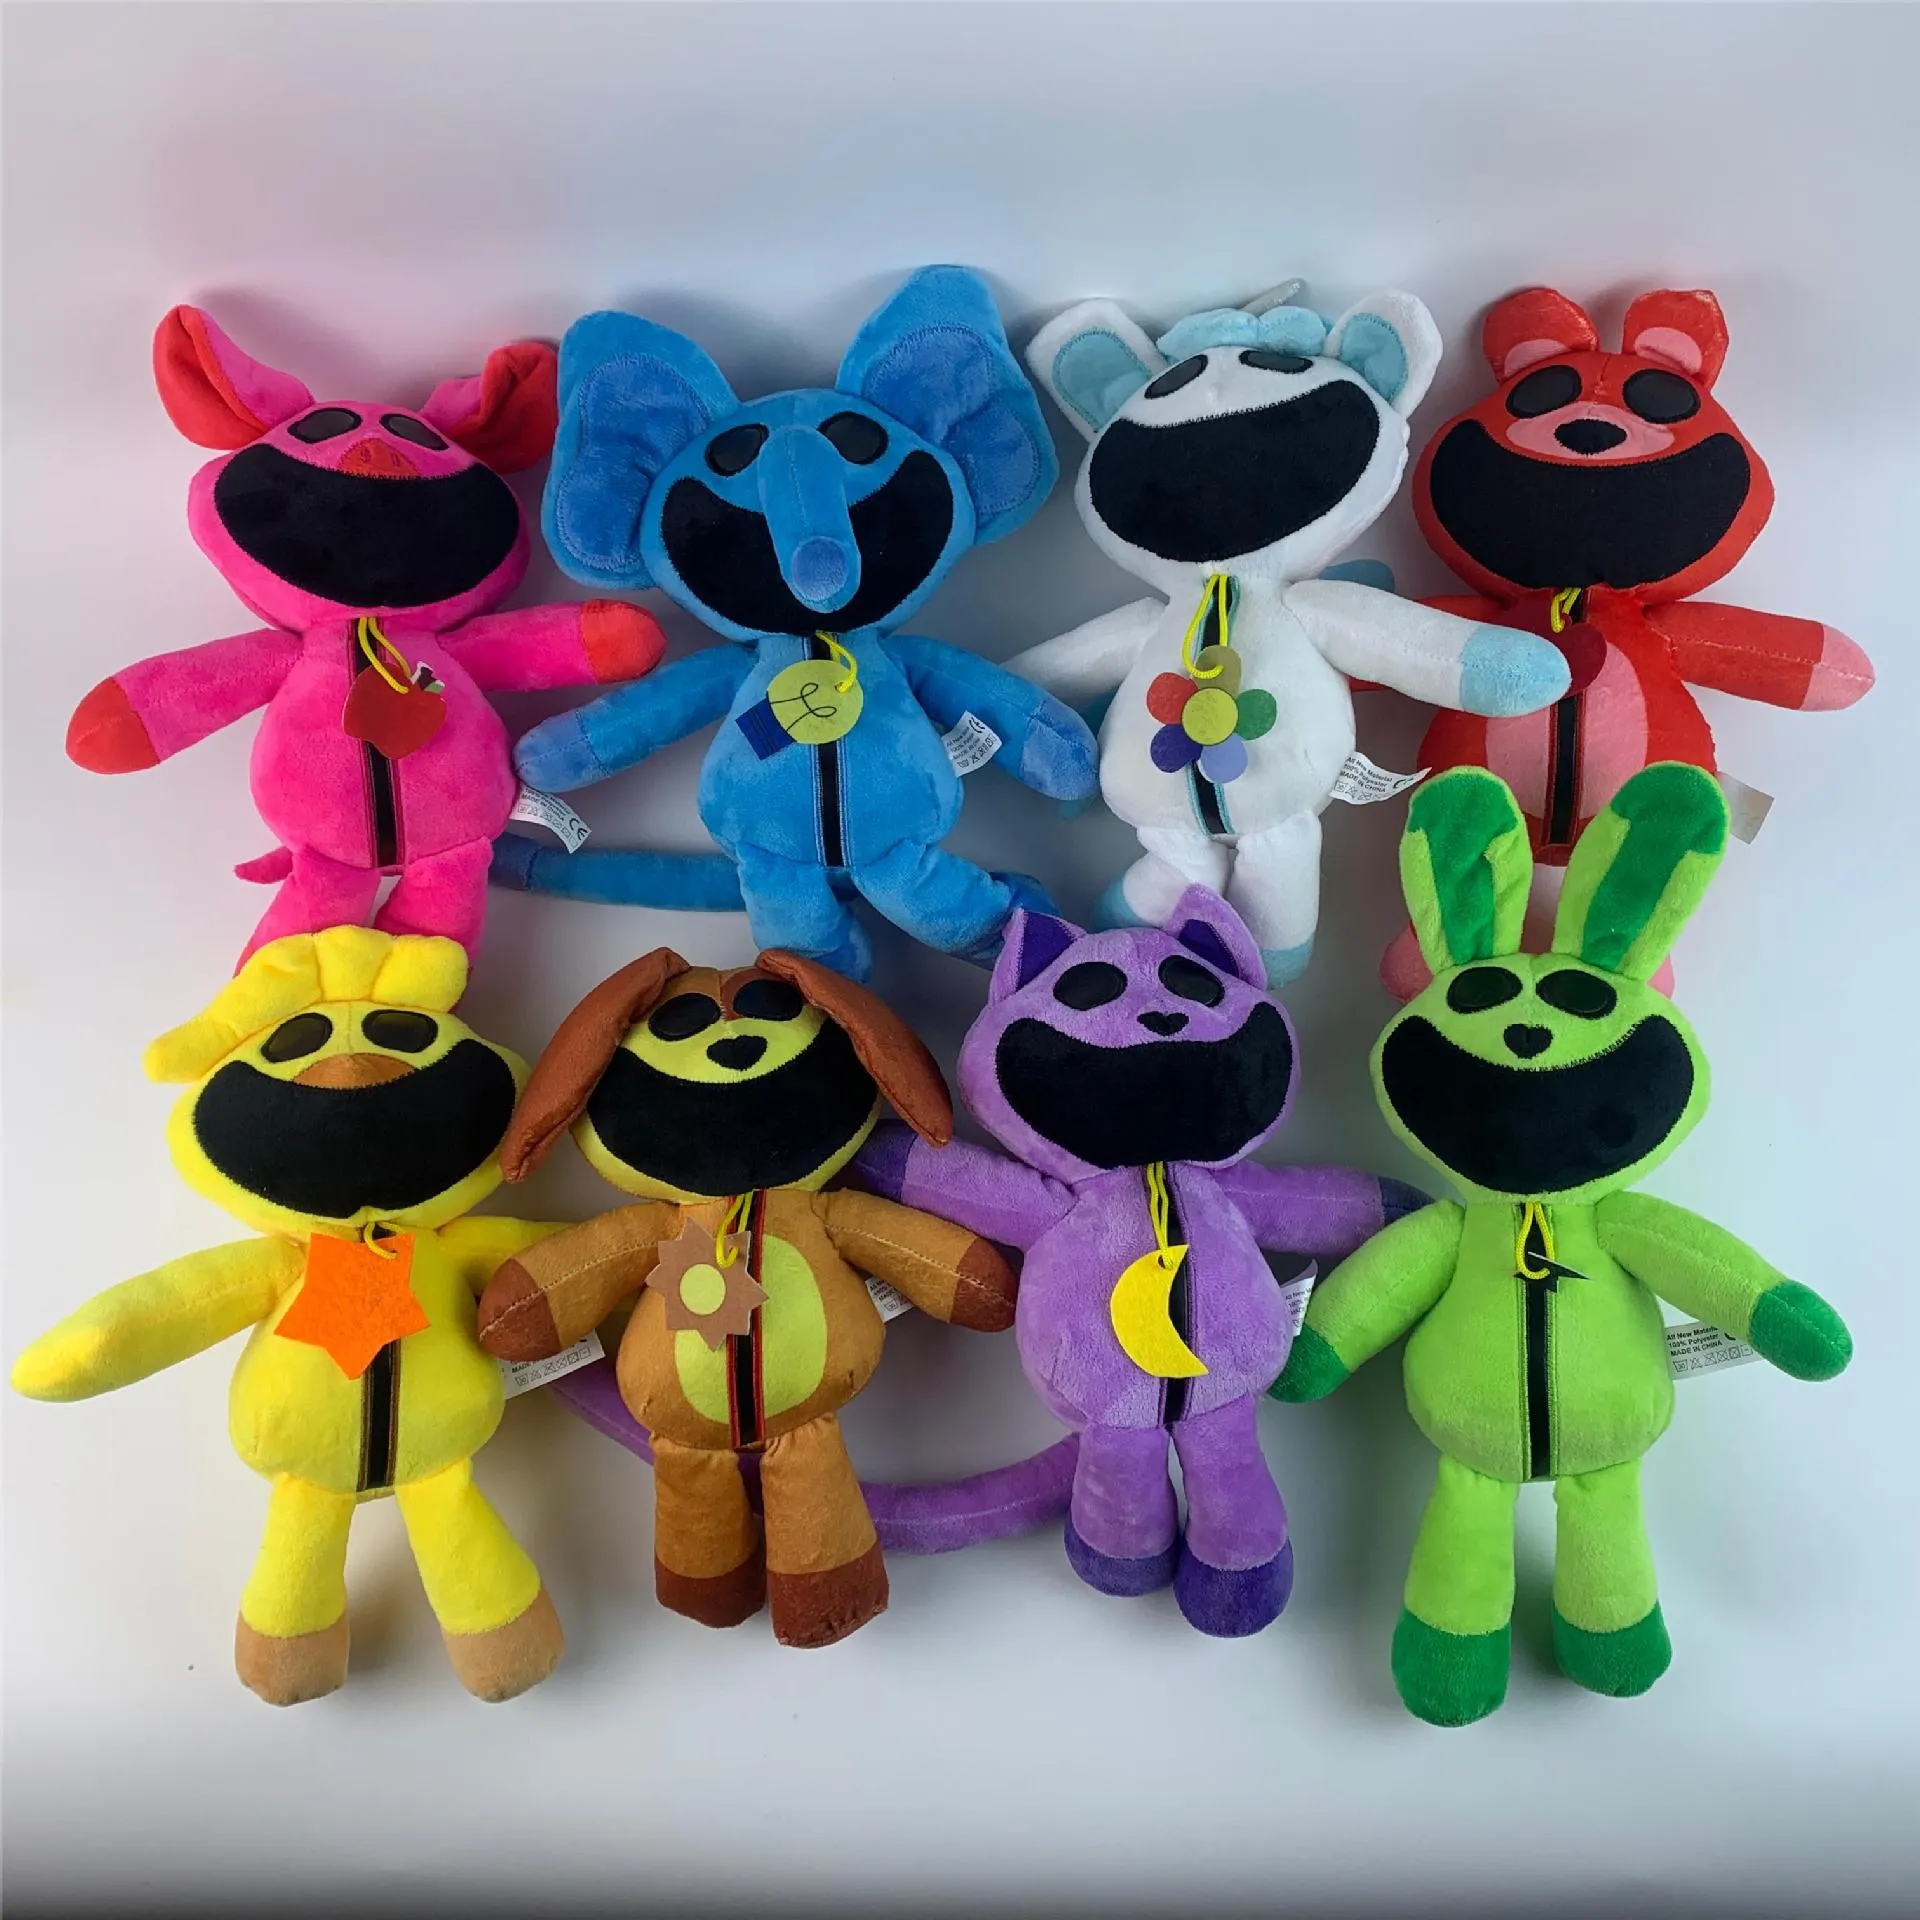 Criaturas sorridentes transfronteira novo produto gato sonolento novo Poppy Amazon vendendo brinquedos de pelúcia de terror